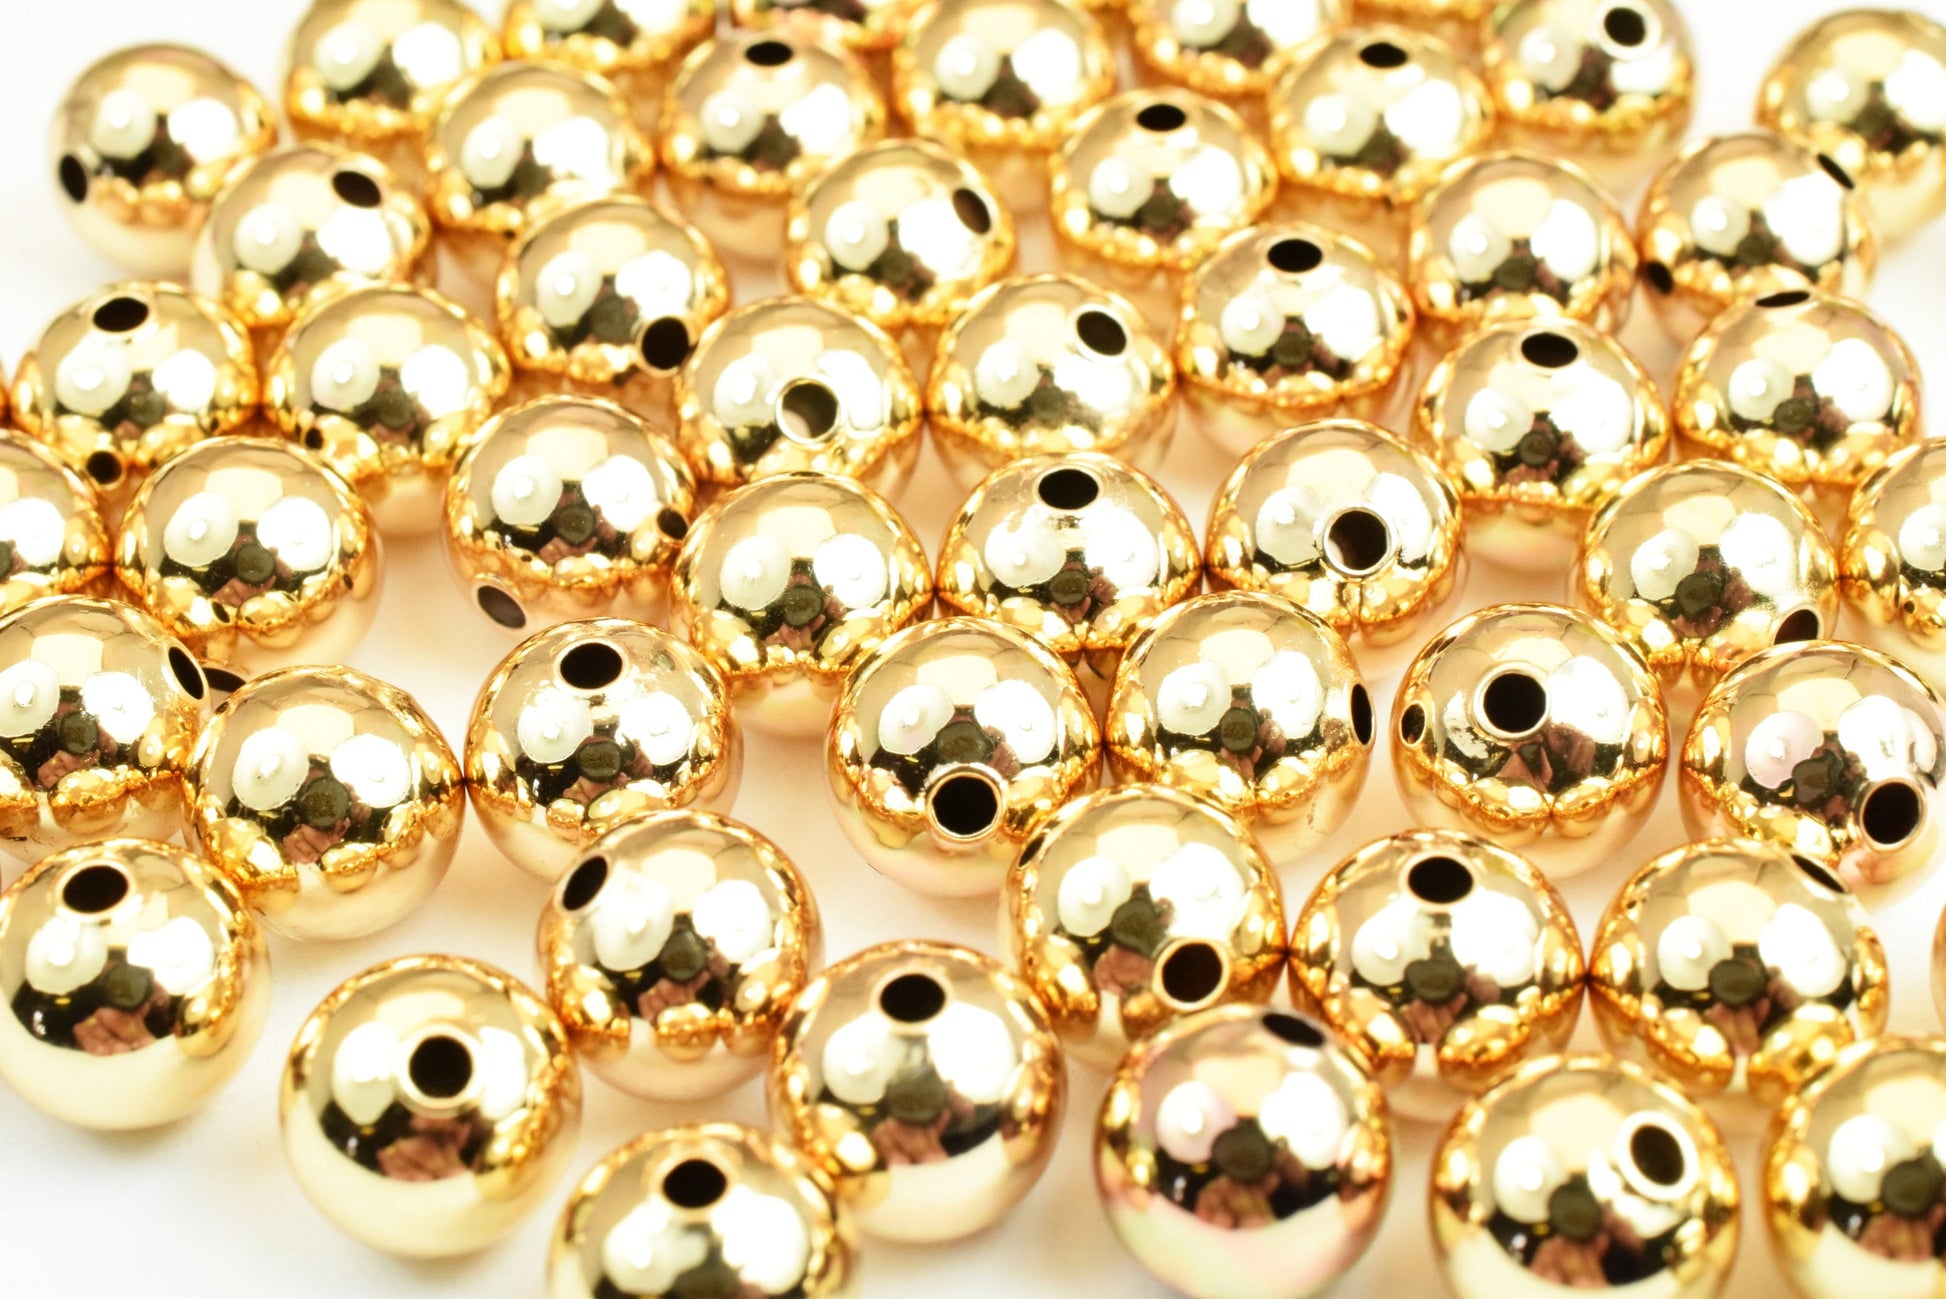 14K Gold FIlled Seamless Round Beads 6mm (4 pcs) 